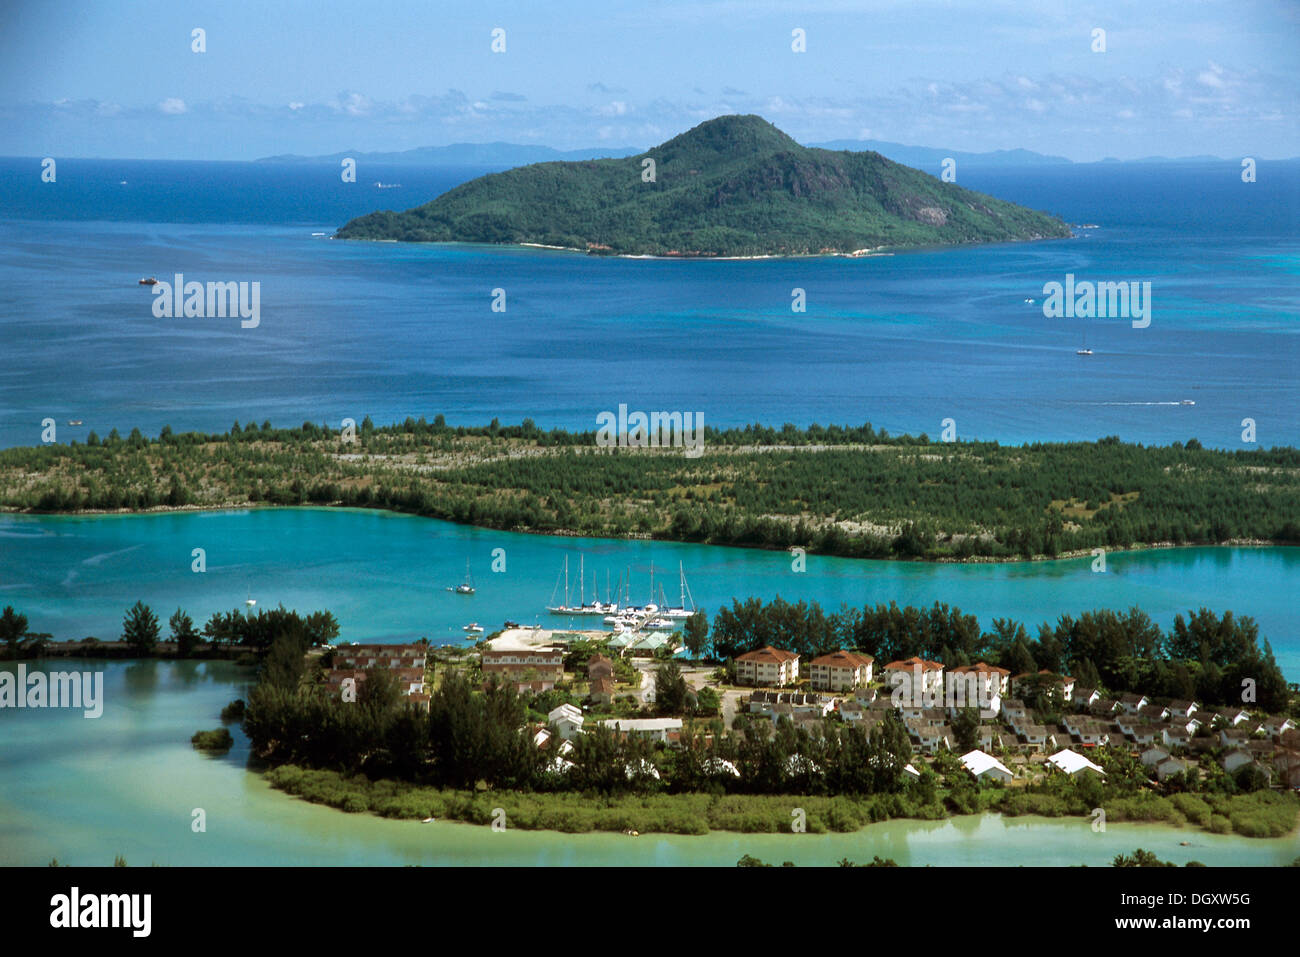 View from a hill on Mahe Island towards an island off the coast, Mahe, Seychelles Stock Photo